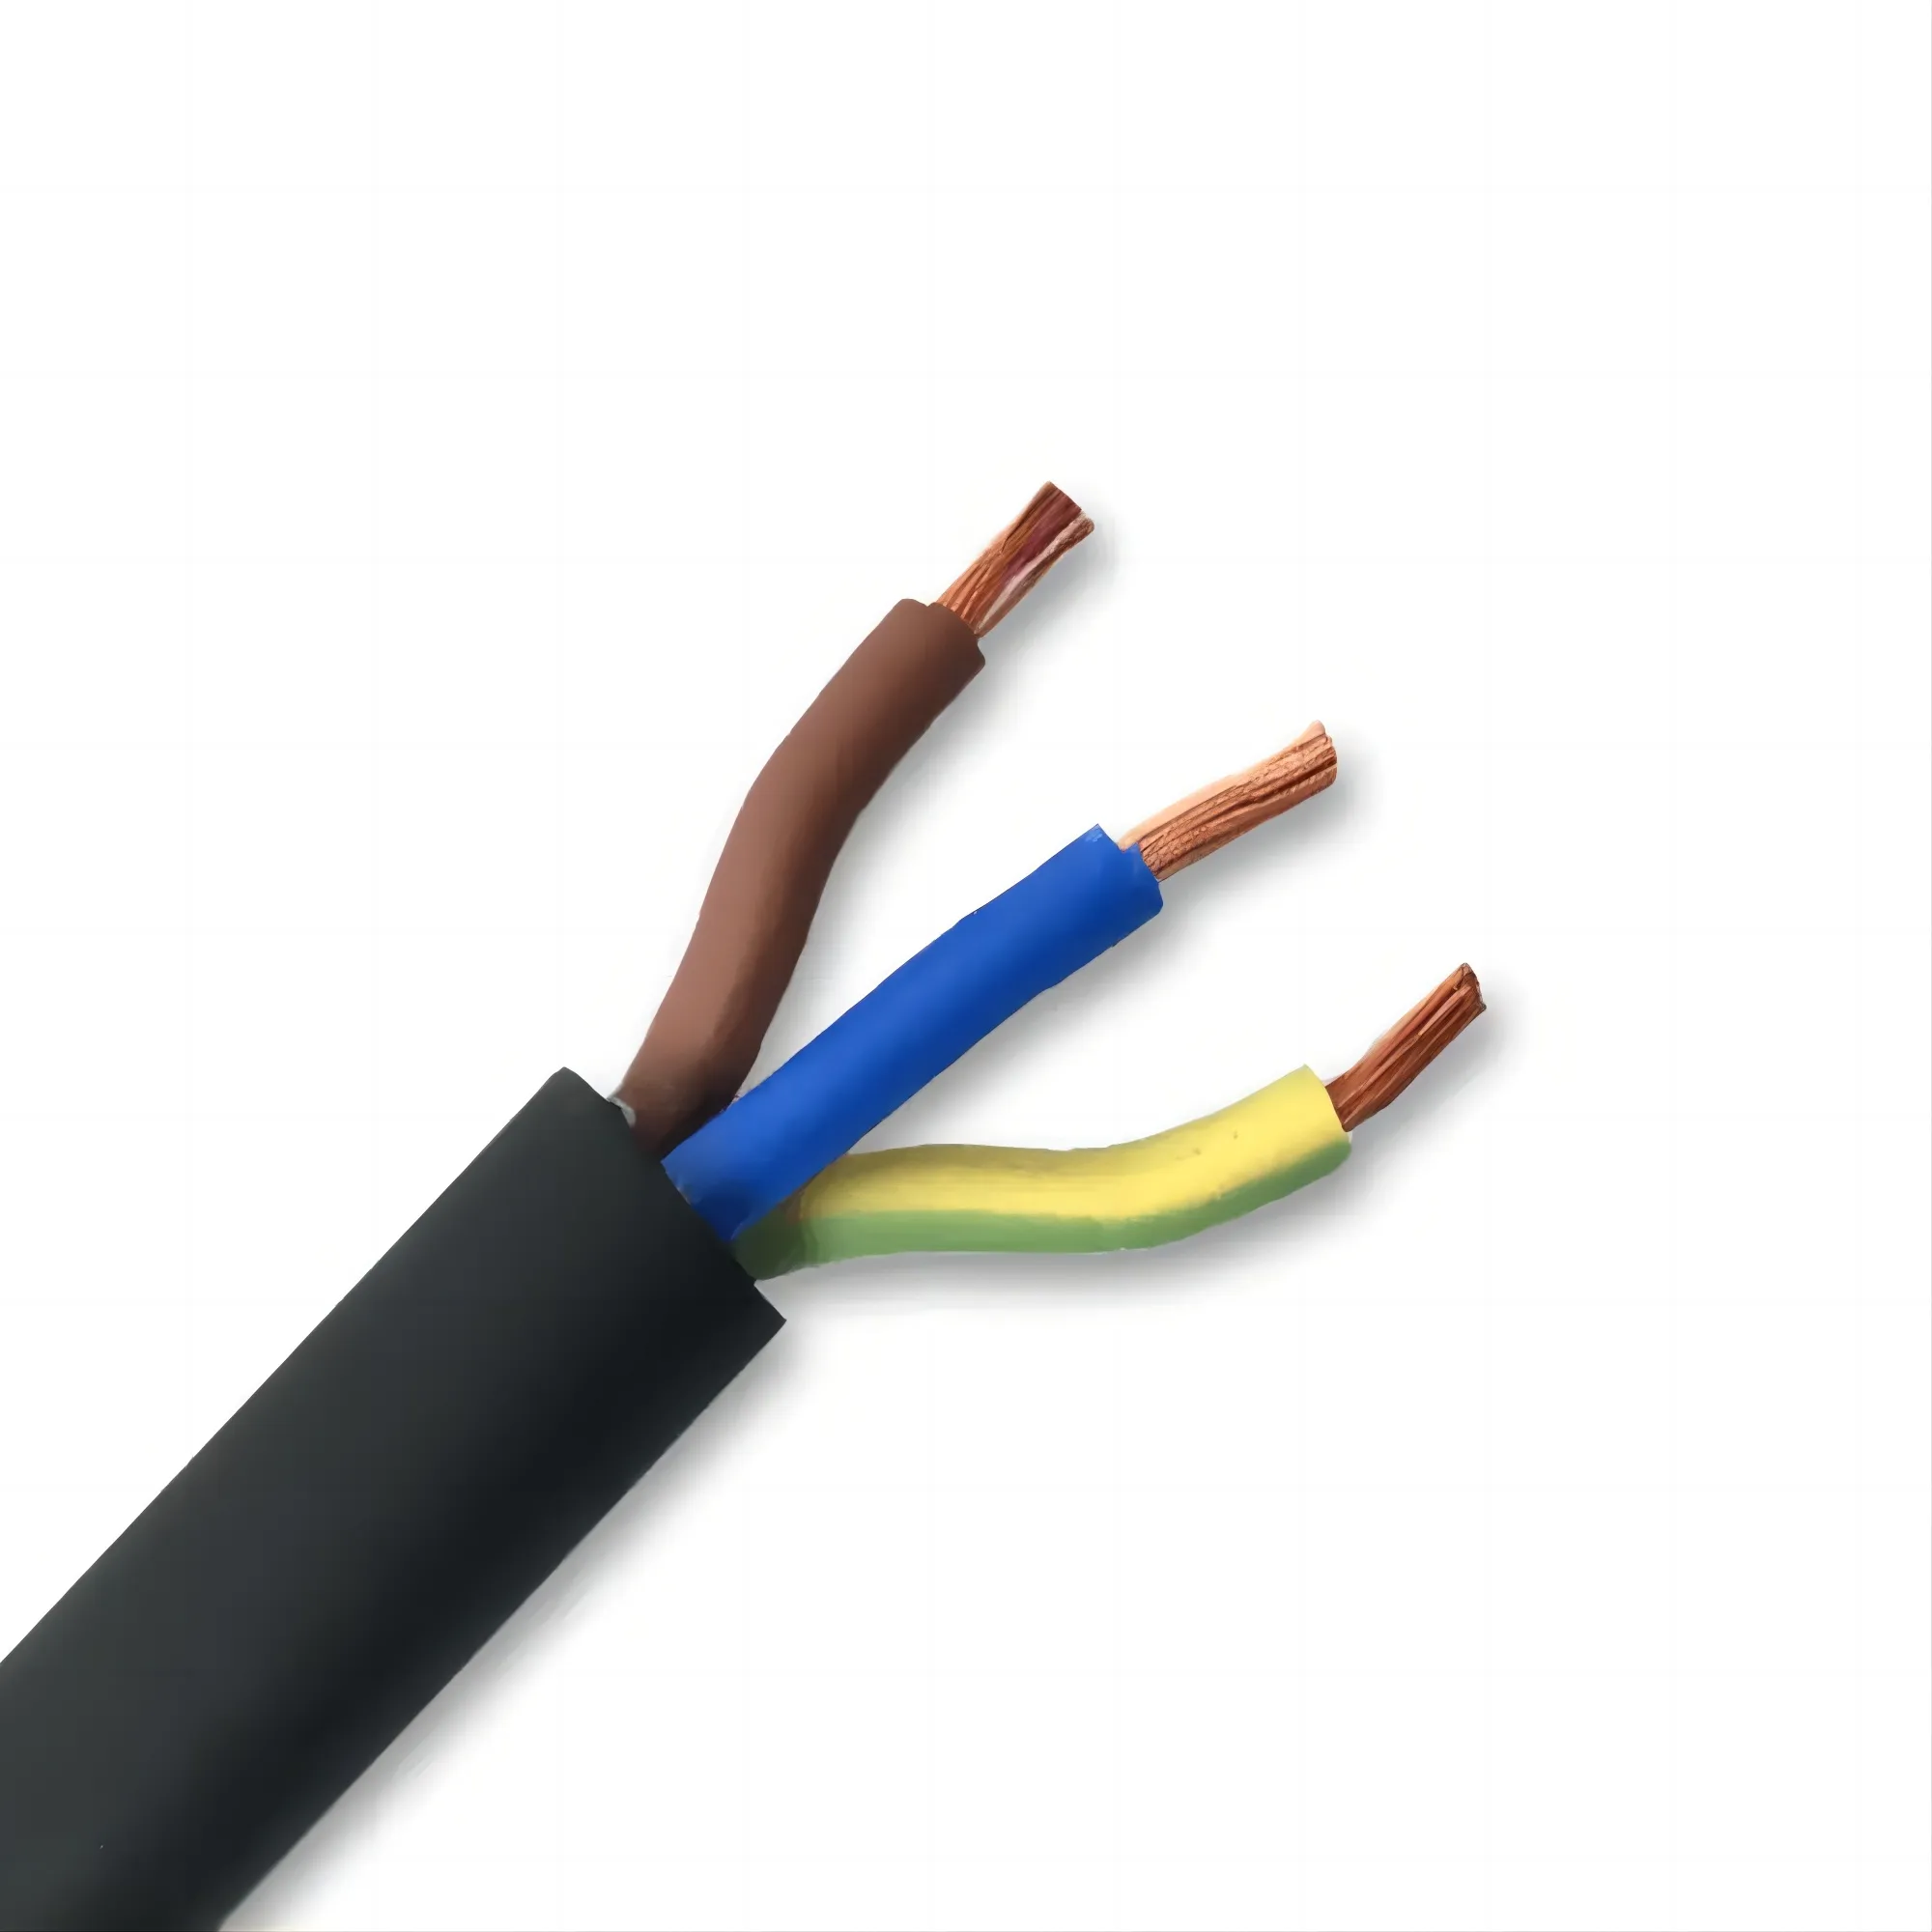 VDE Stranded H07RN-F 3G4.0mm2 450/750V Flexible Rubber Cable